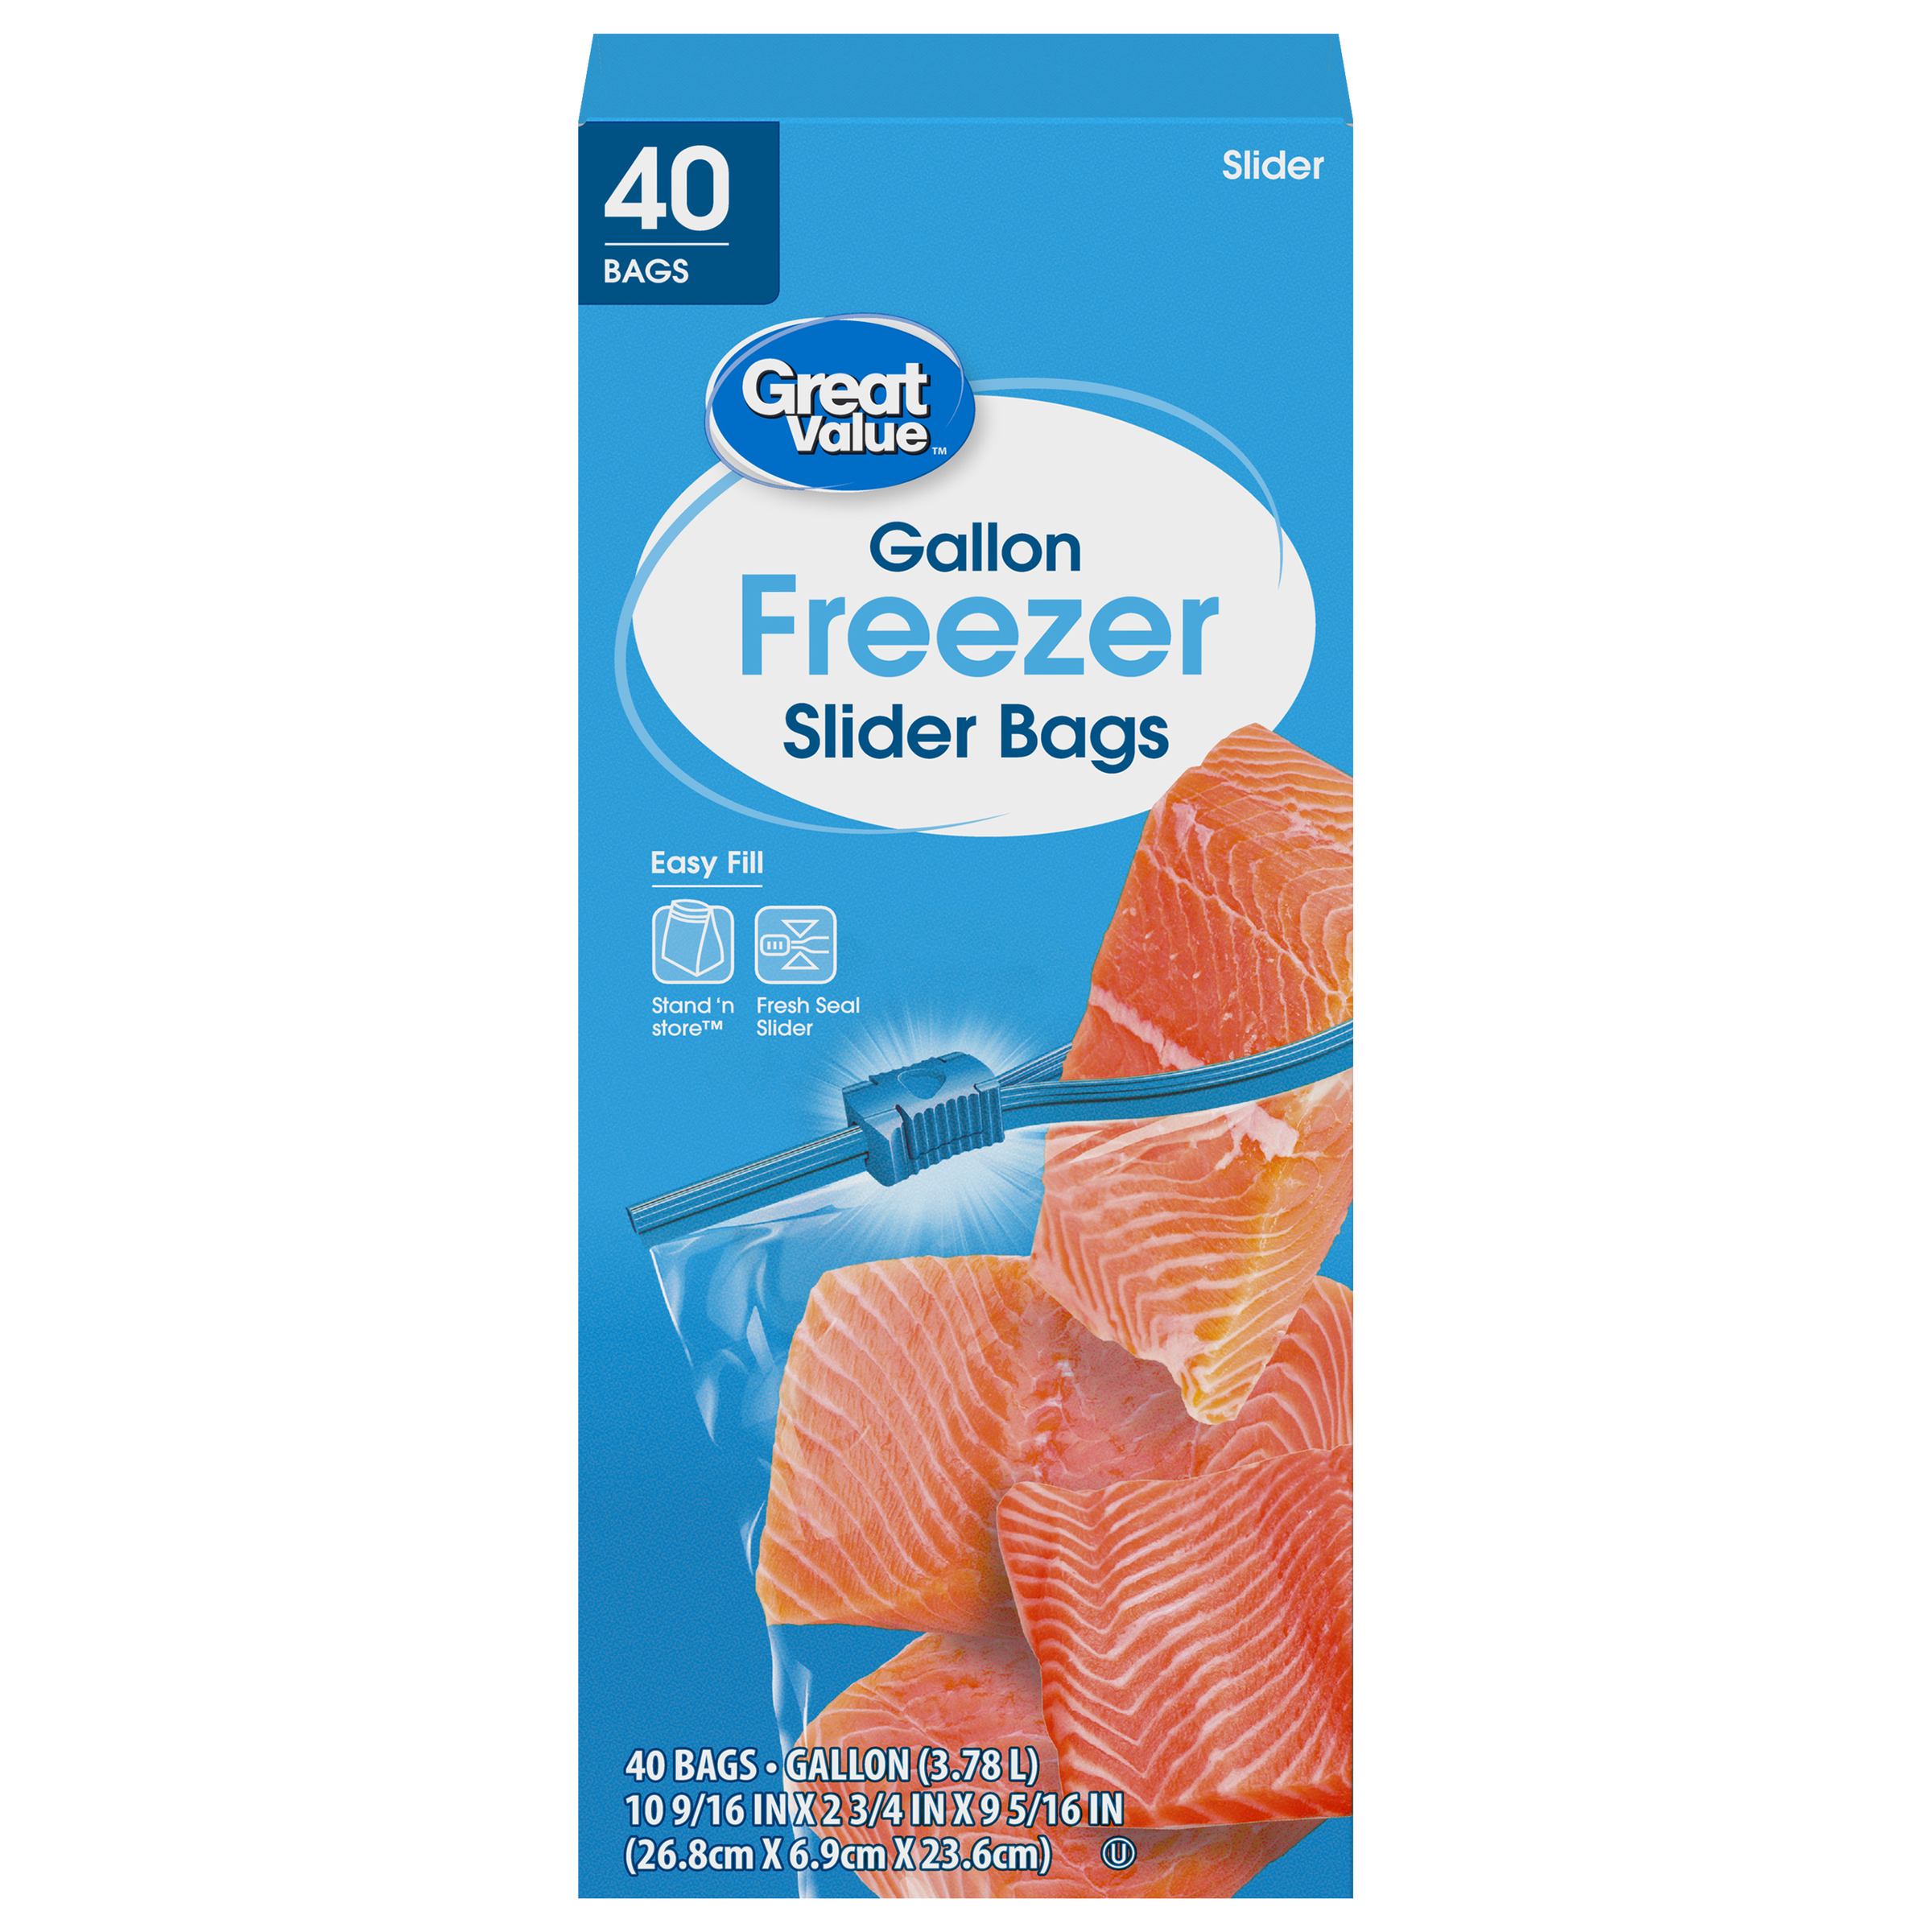 Great Value Freezer Guard Slider Zipper Bags, Gallon Freezer, 40 Count - image 1 of 6